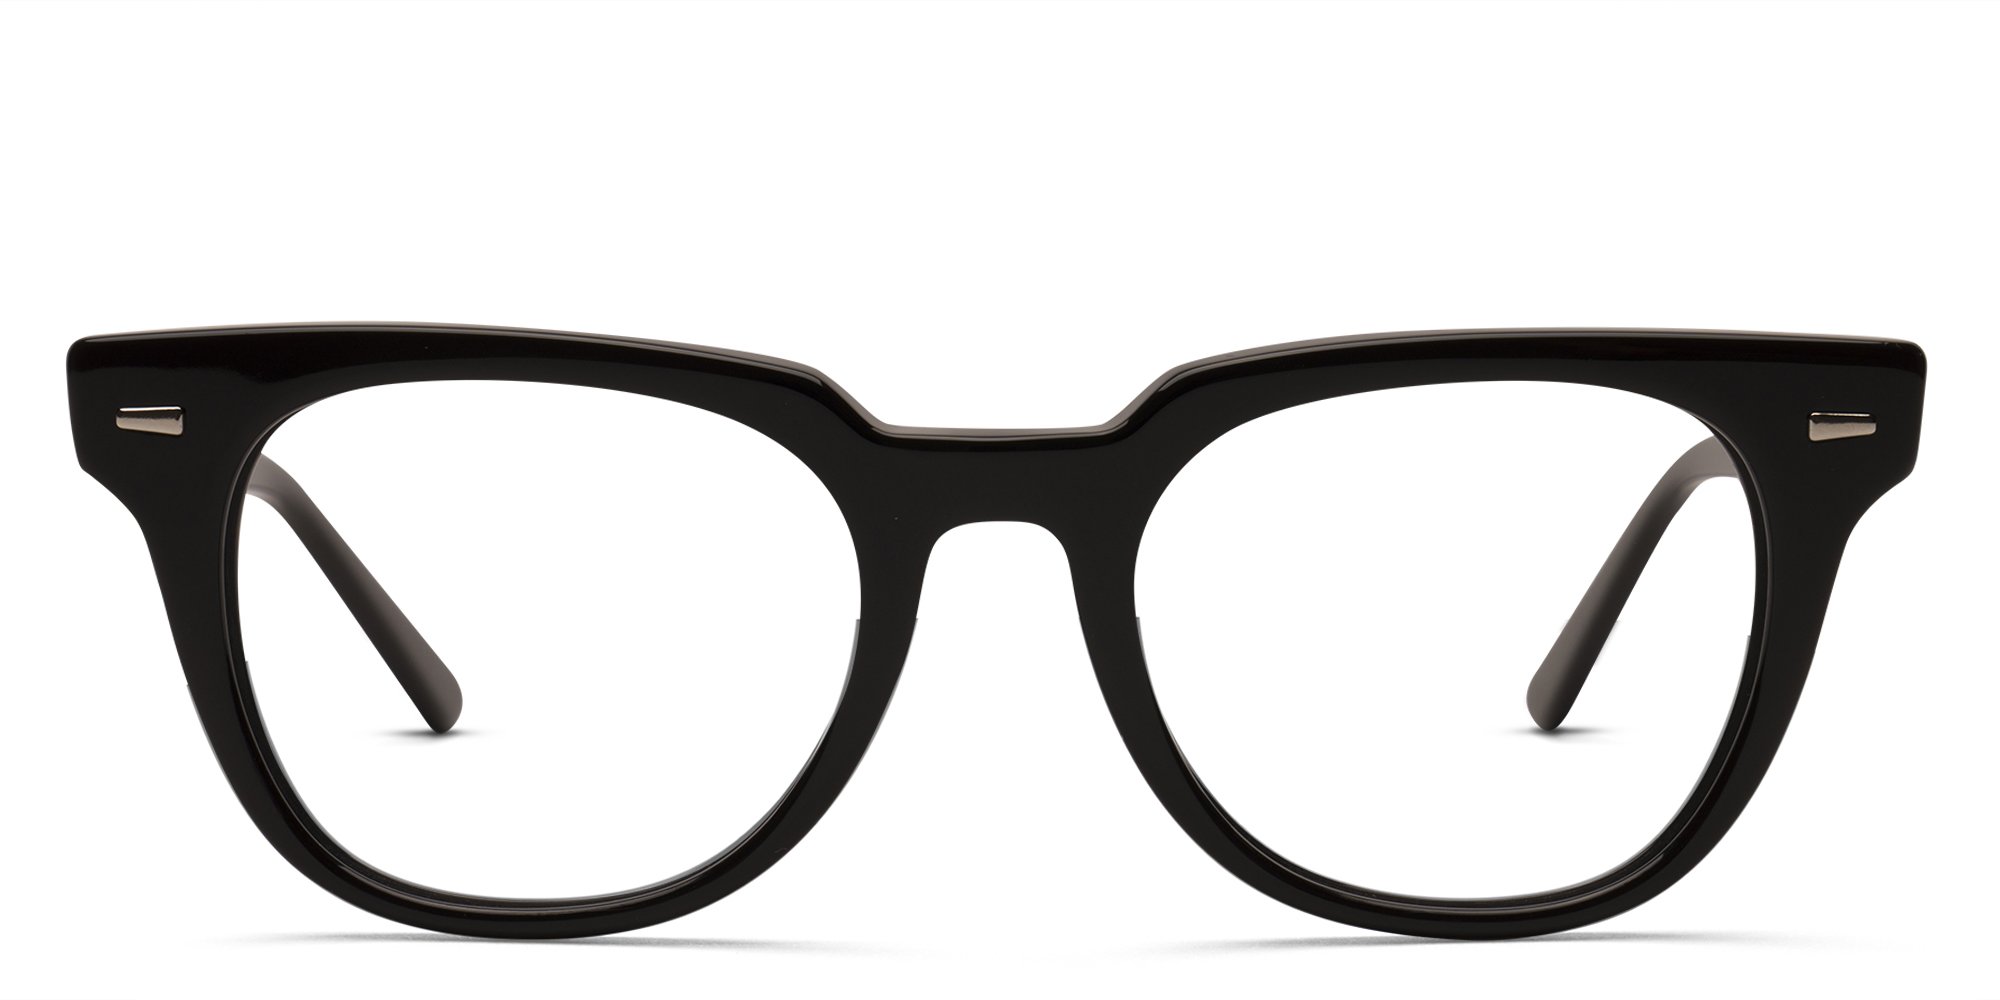 Glasses Main Image